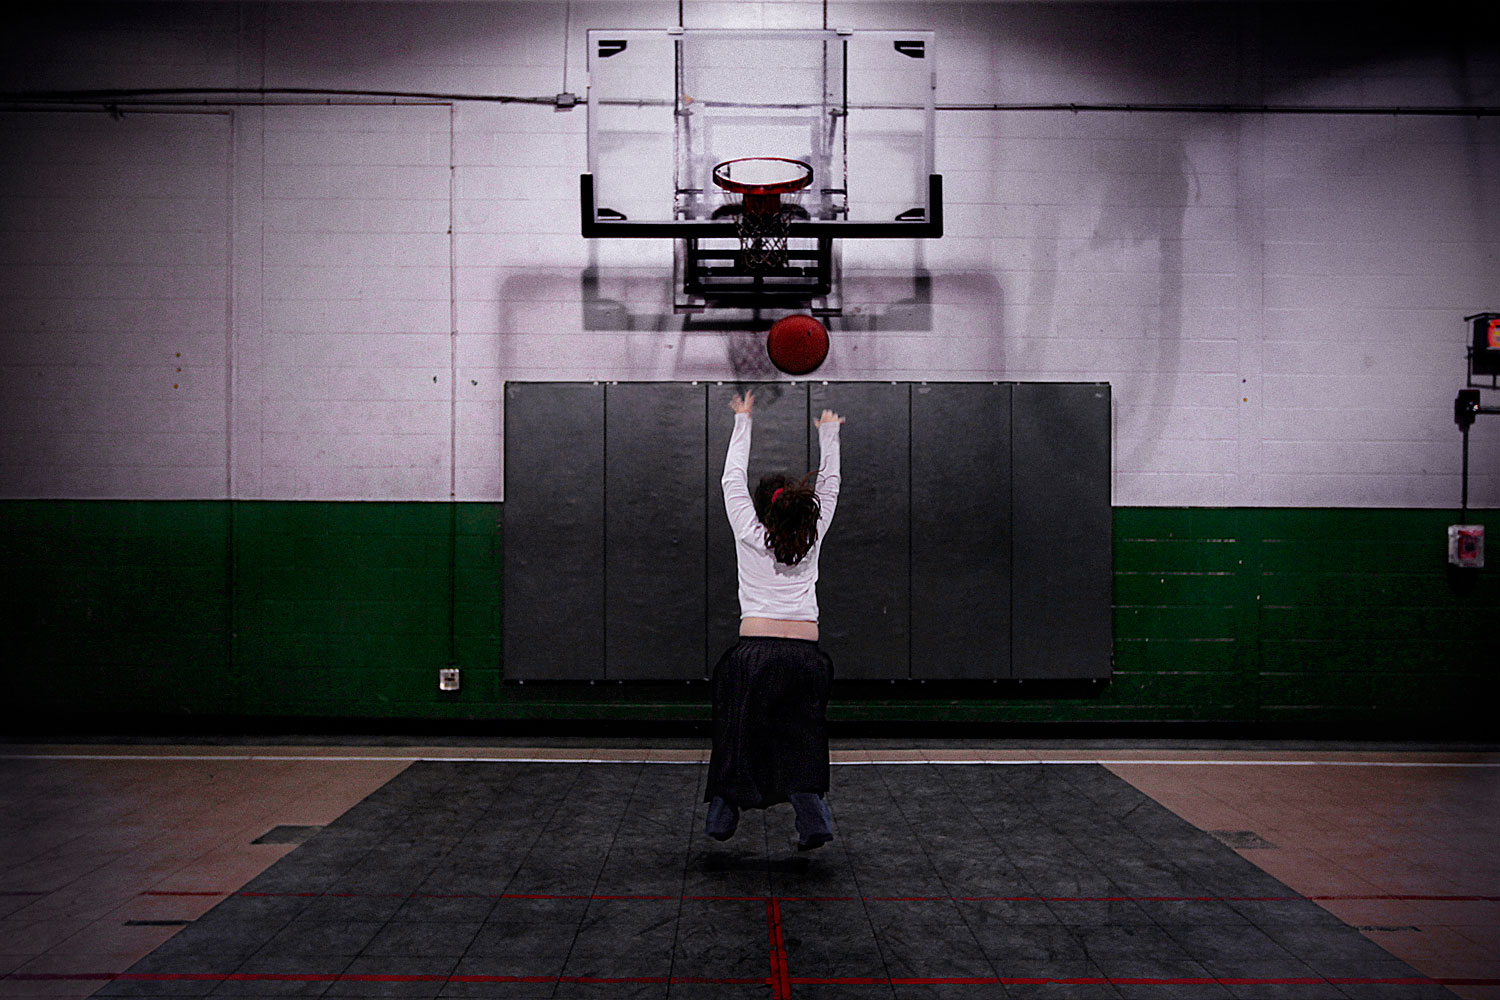 Shameen Pasha, 9, plays basketball alone at the gymnasium of her school at Villa Park, Ill., April 24, 2010.